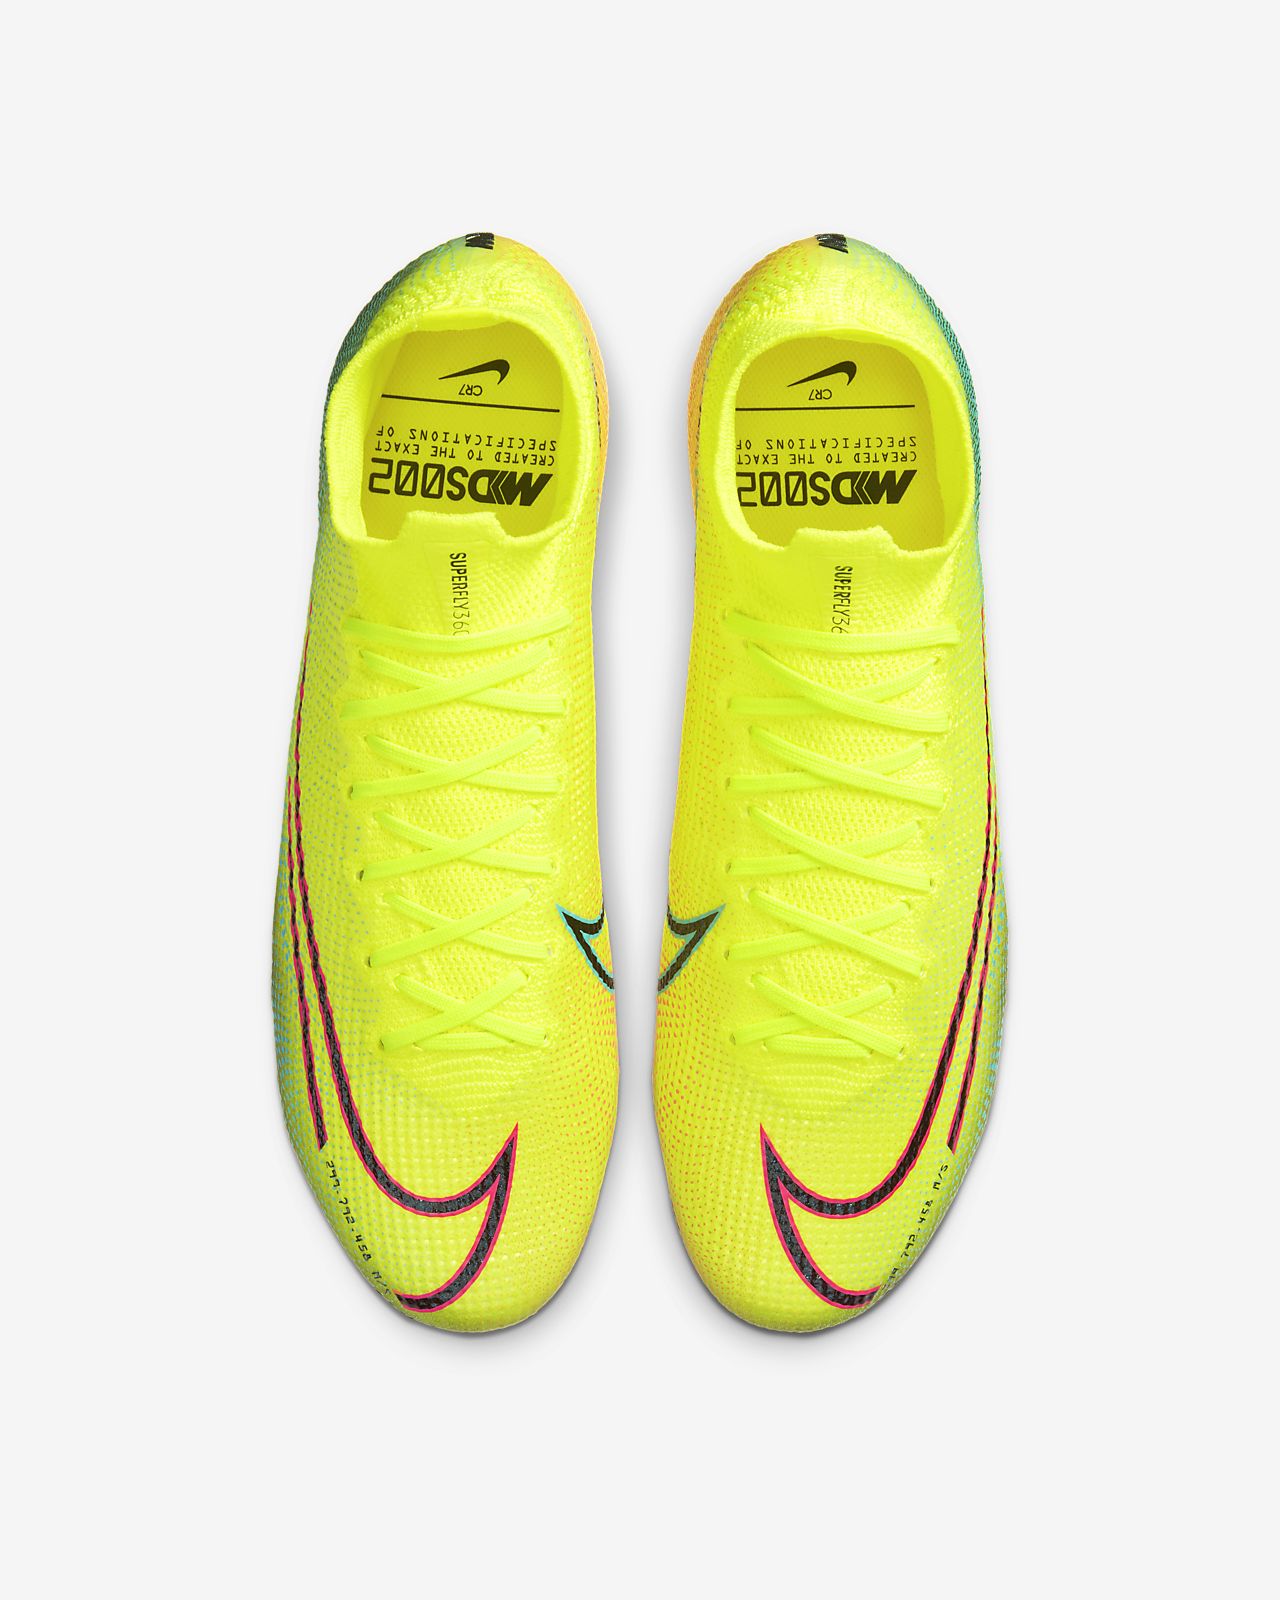 Nike Mercurial Superfly VII Pro Football Boots. Rebel Sport